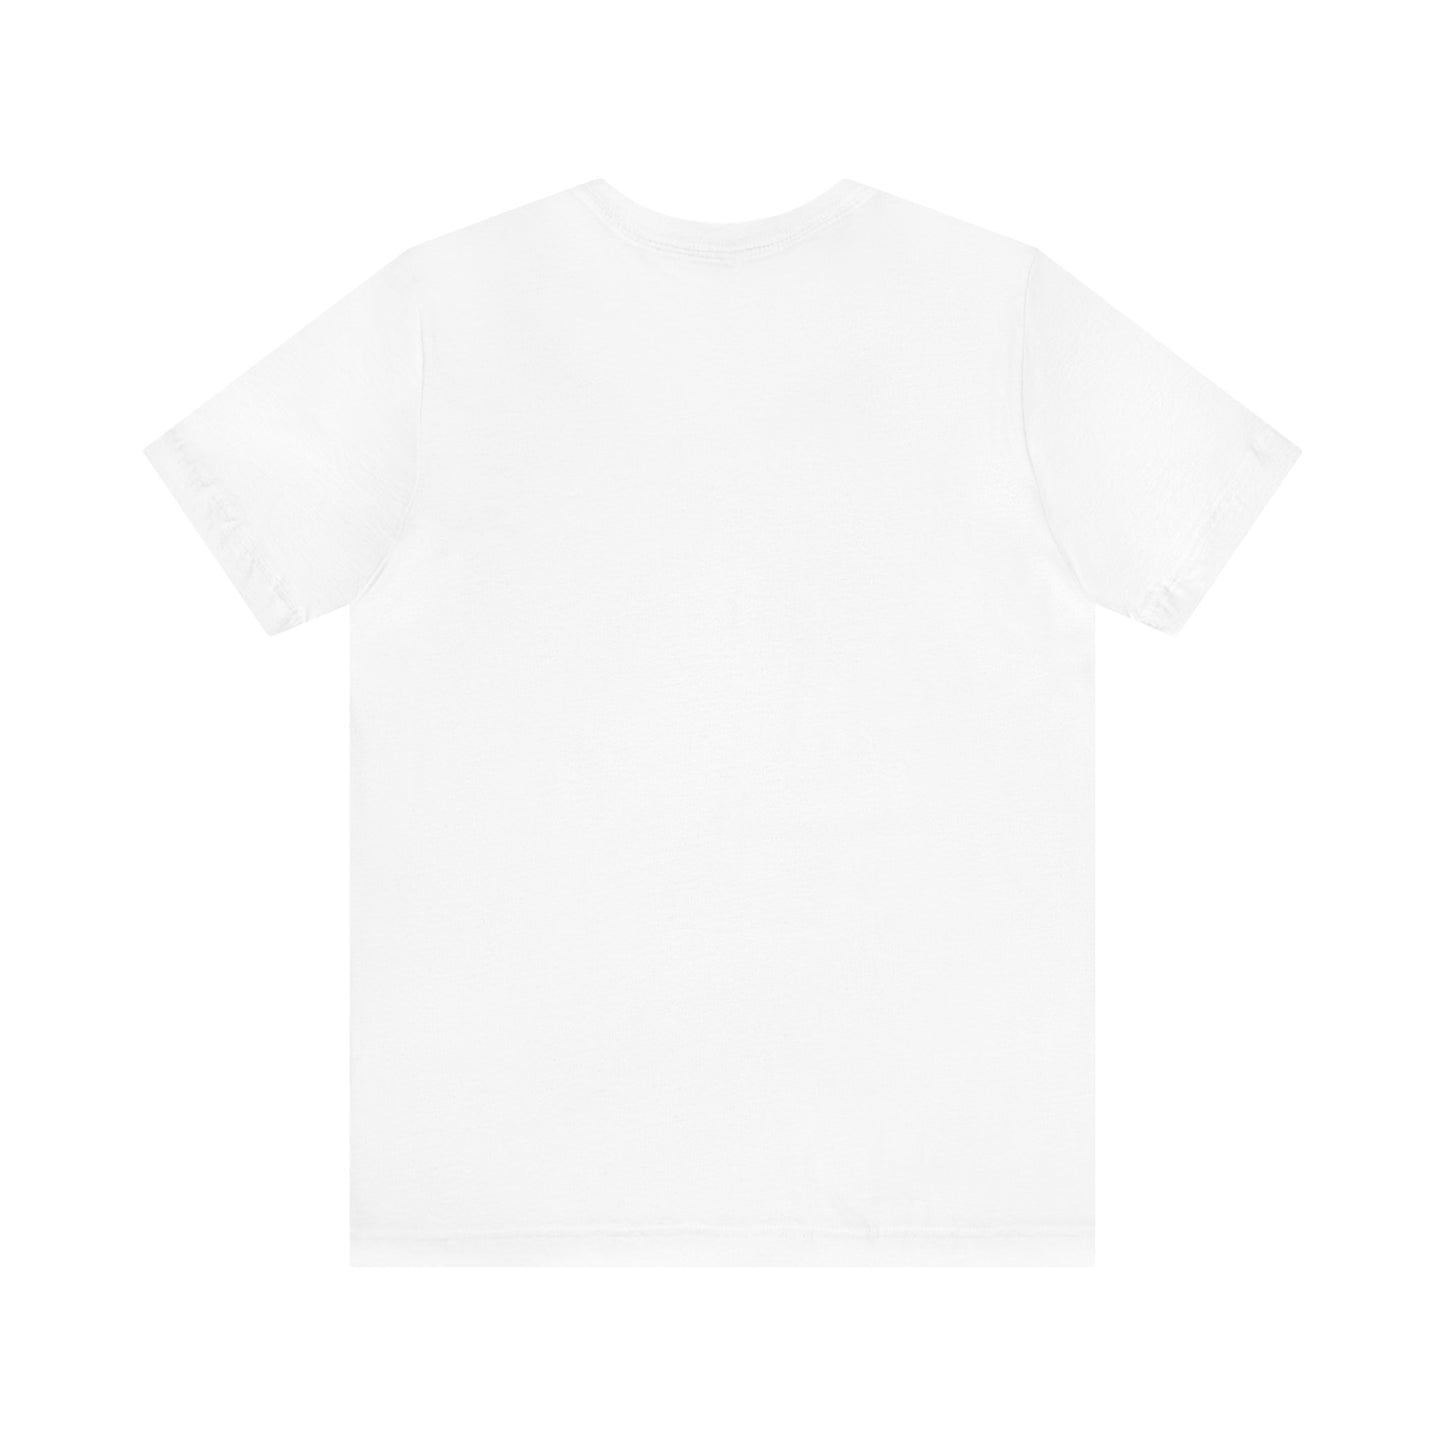 Unisex T-shirt Initial D